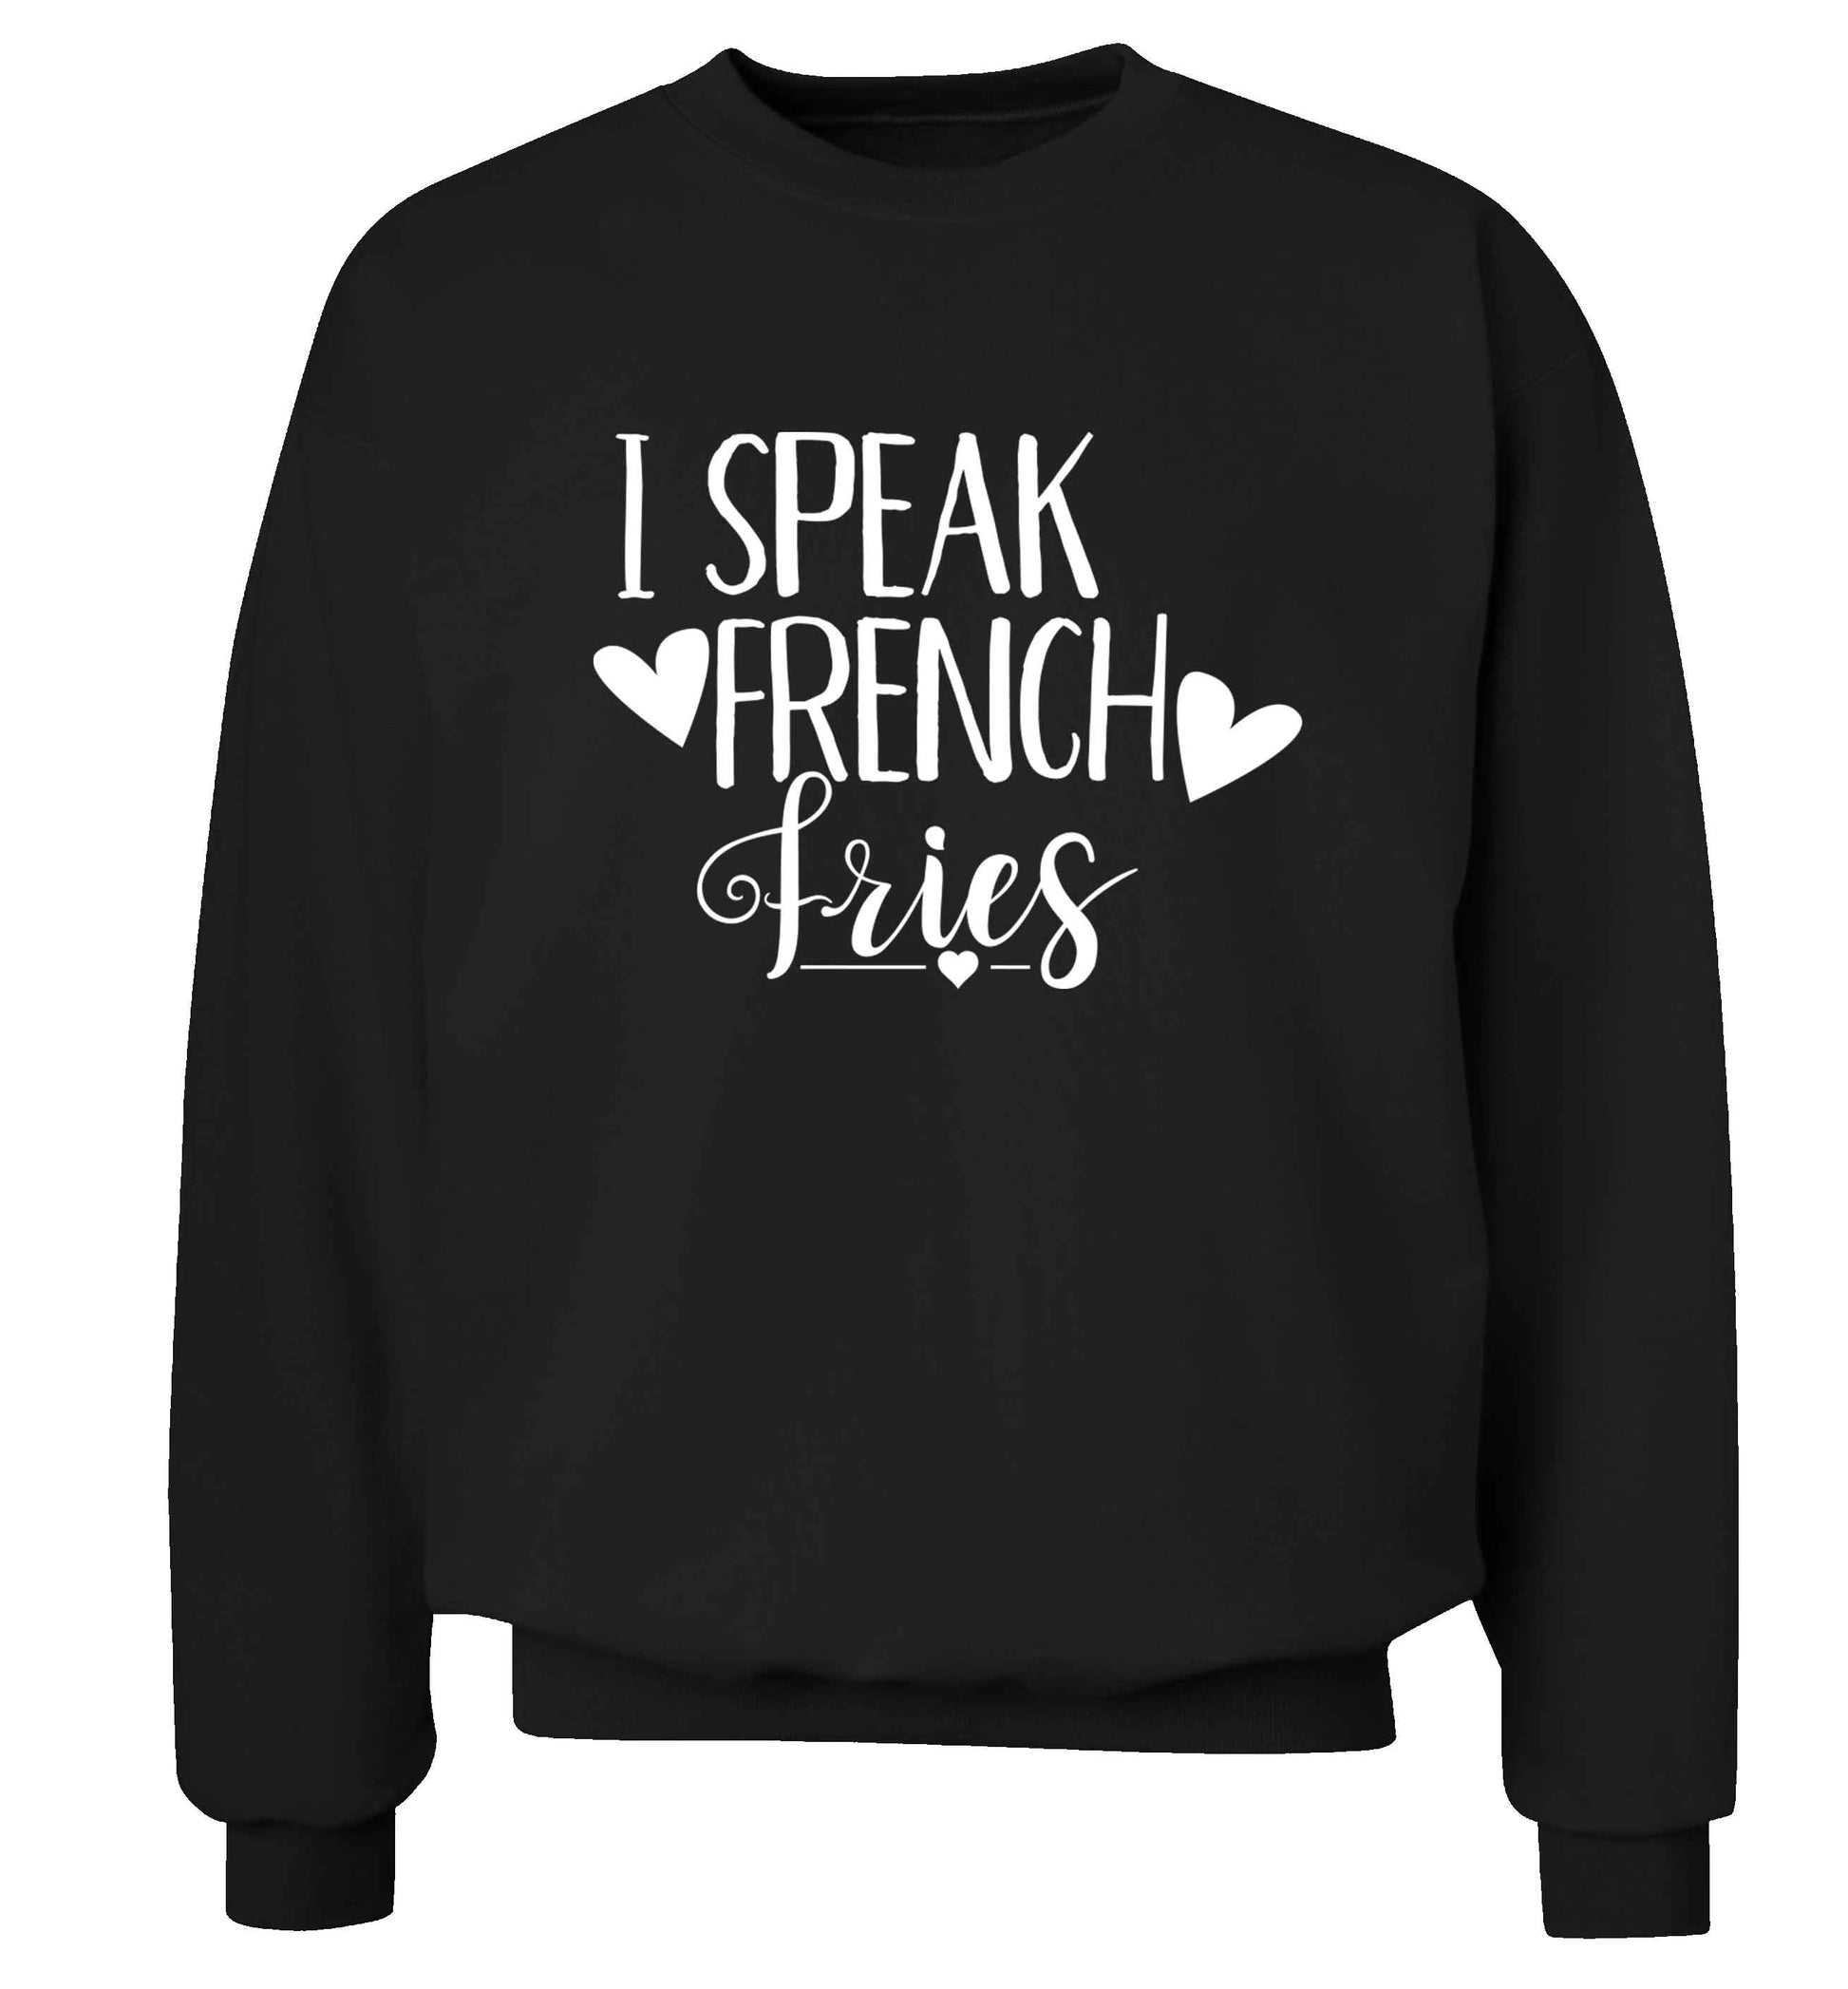 I speak French fries Adult's unisex black Sweater 2XL